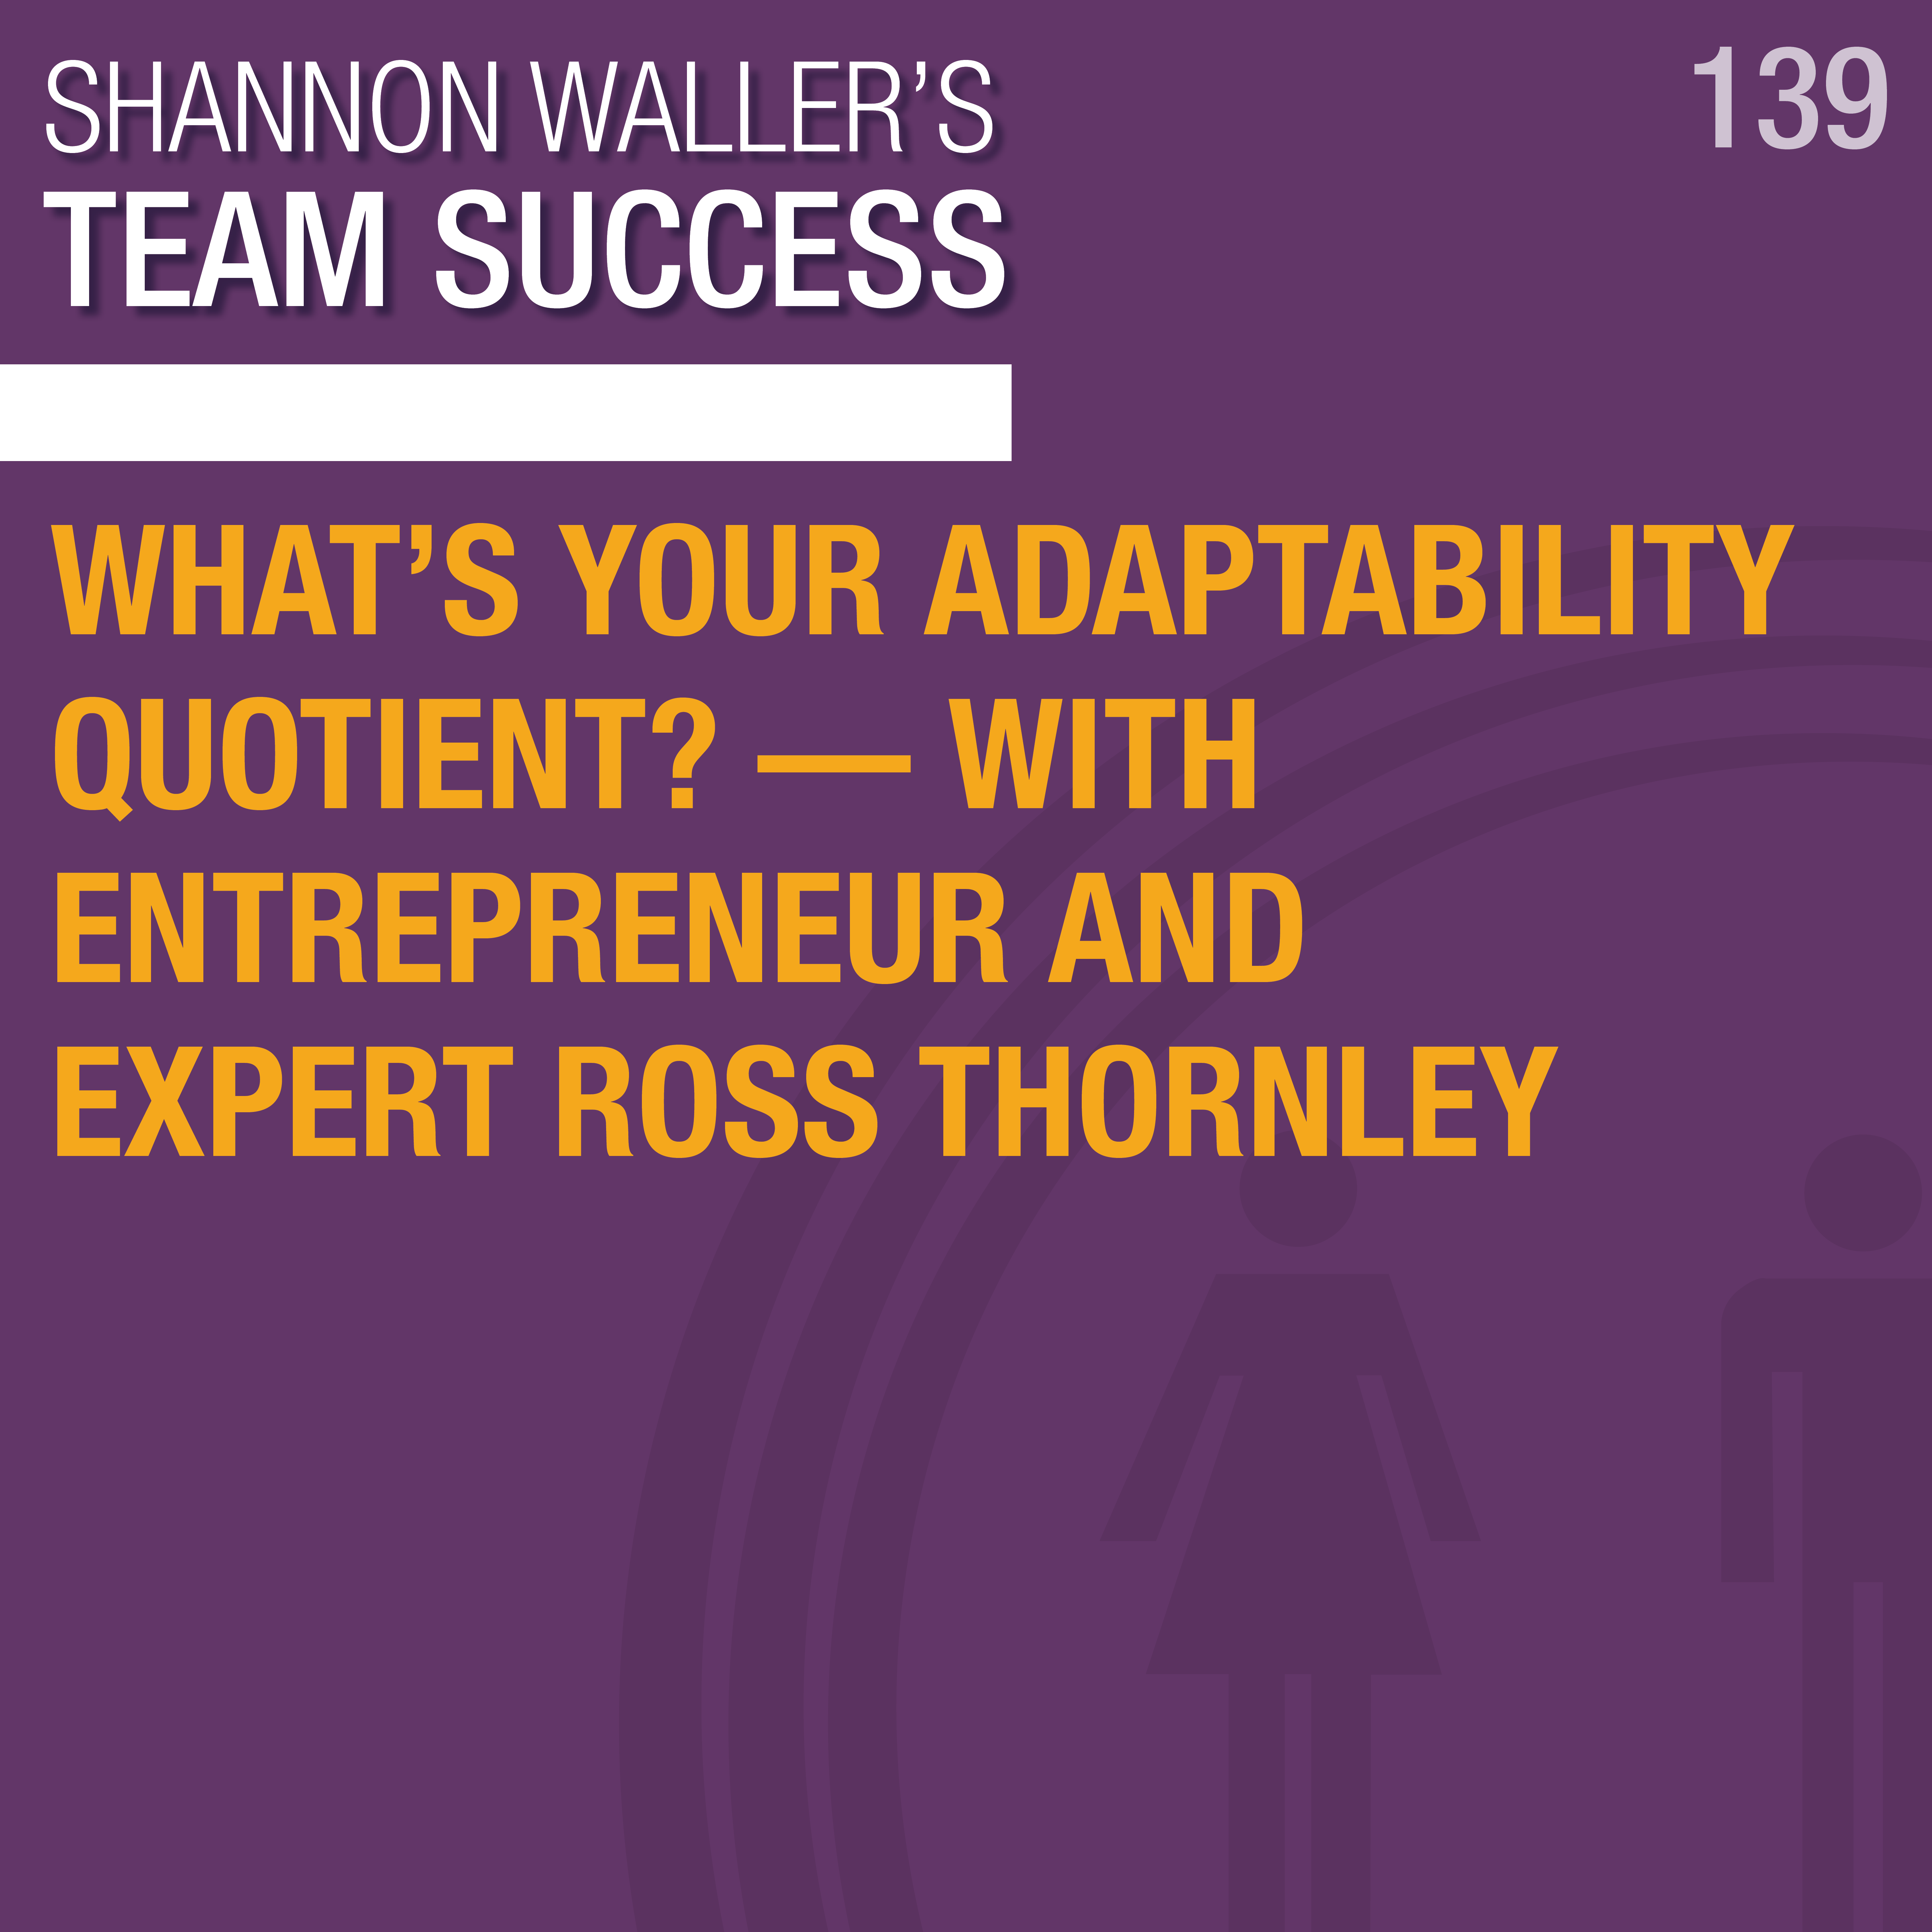 Adaptability Quotient - Shannon Waller's Team Success